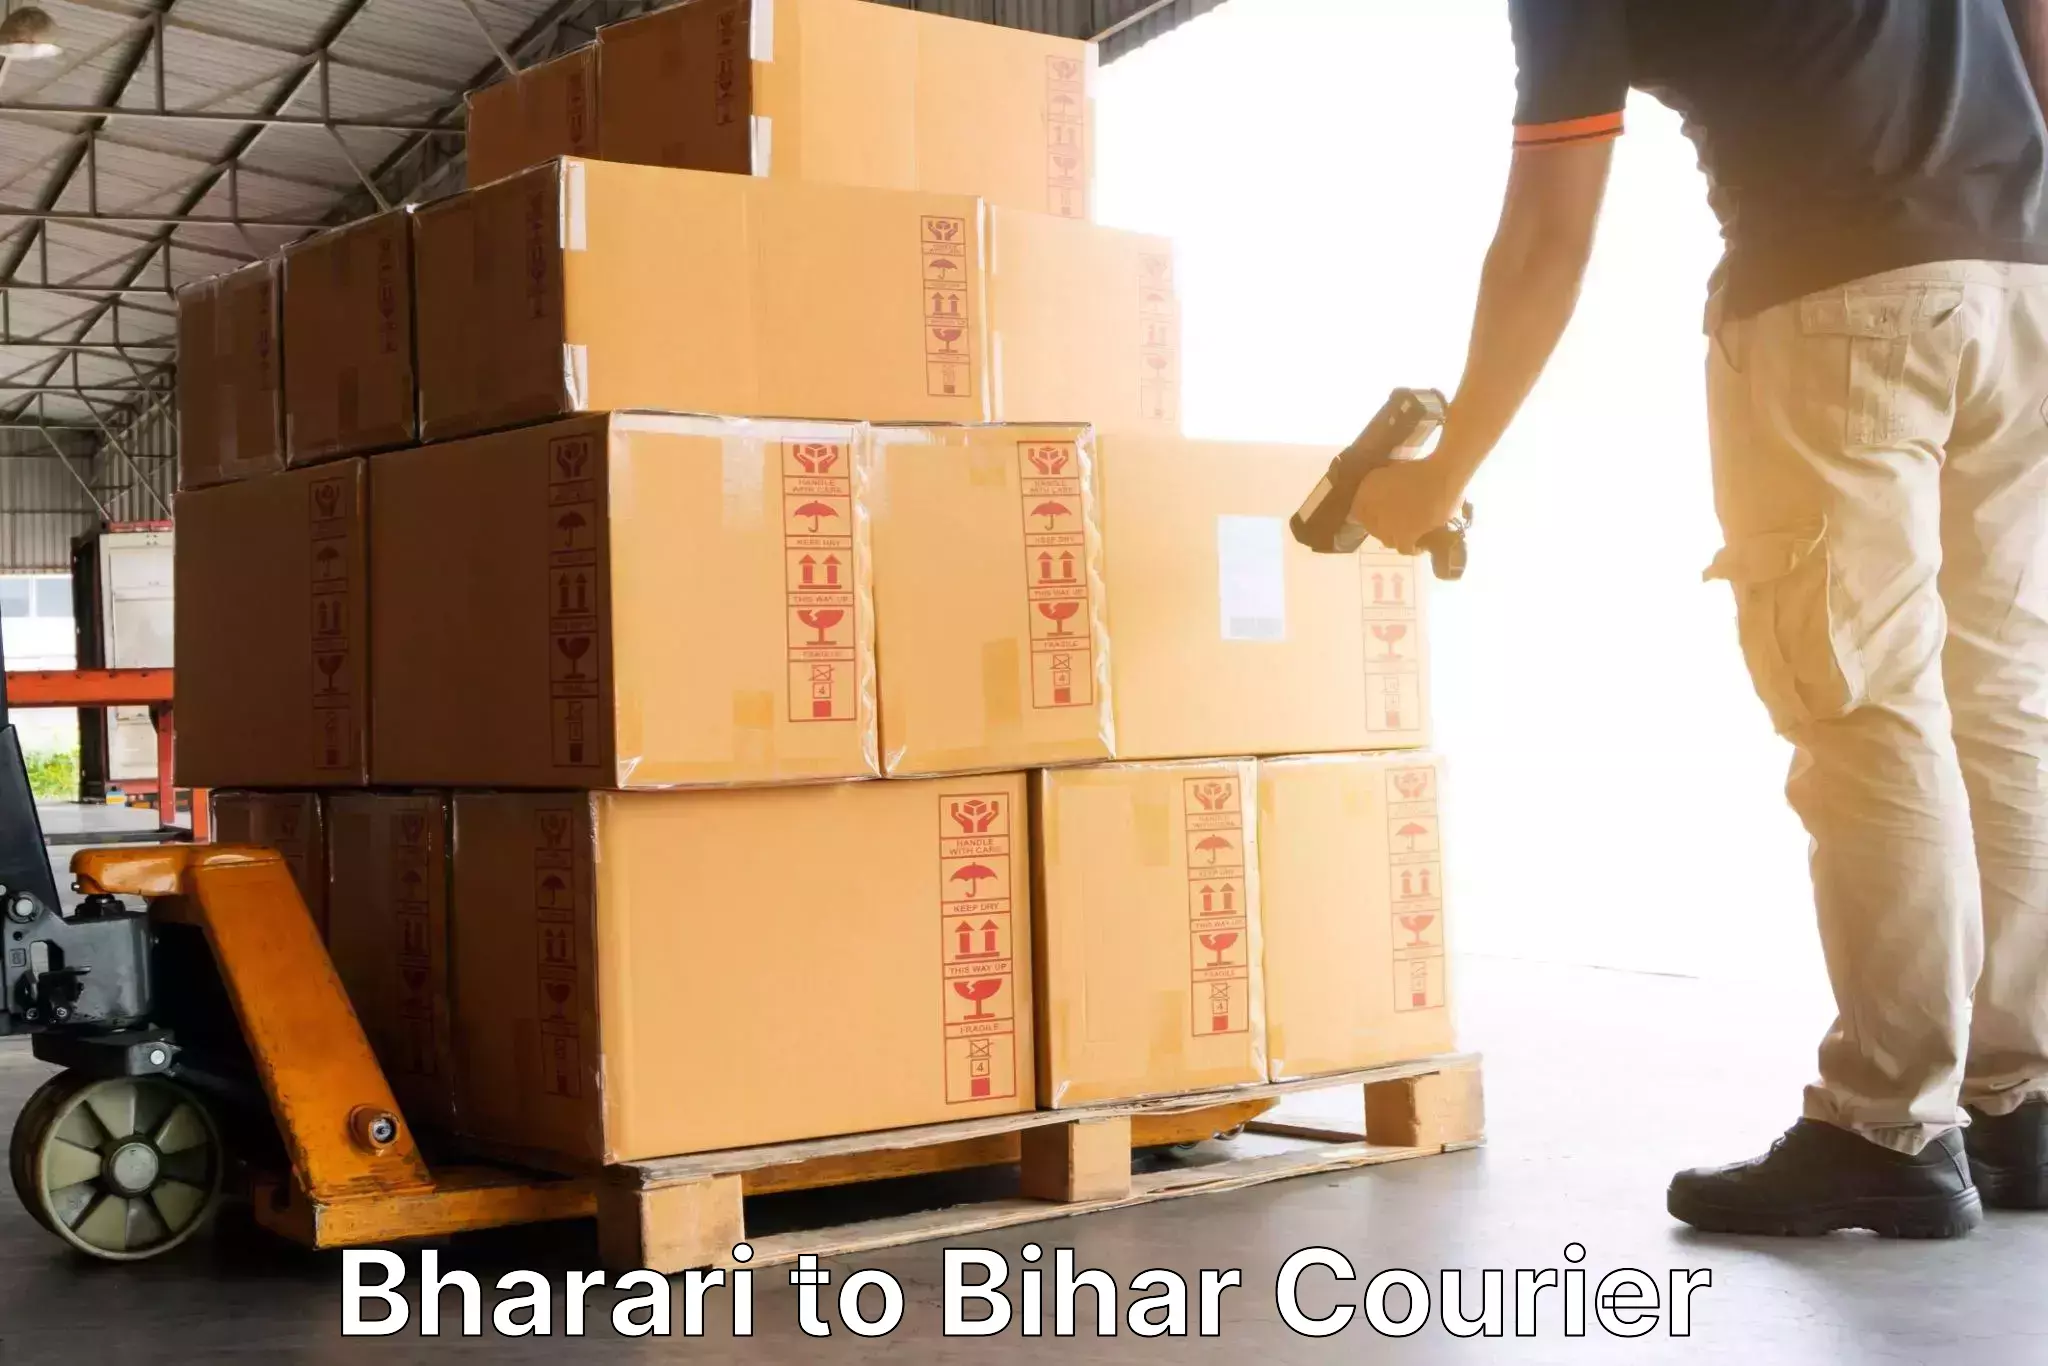 Digital courier platforms Bharari to Bihar